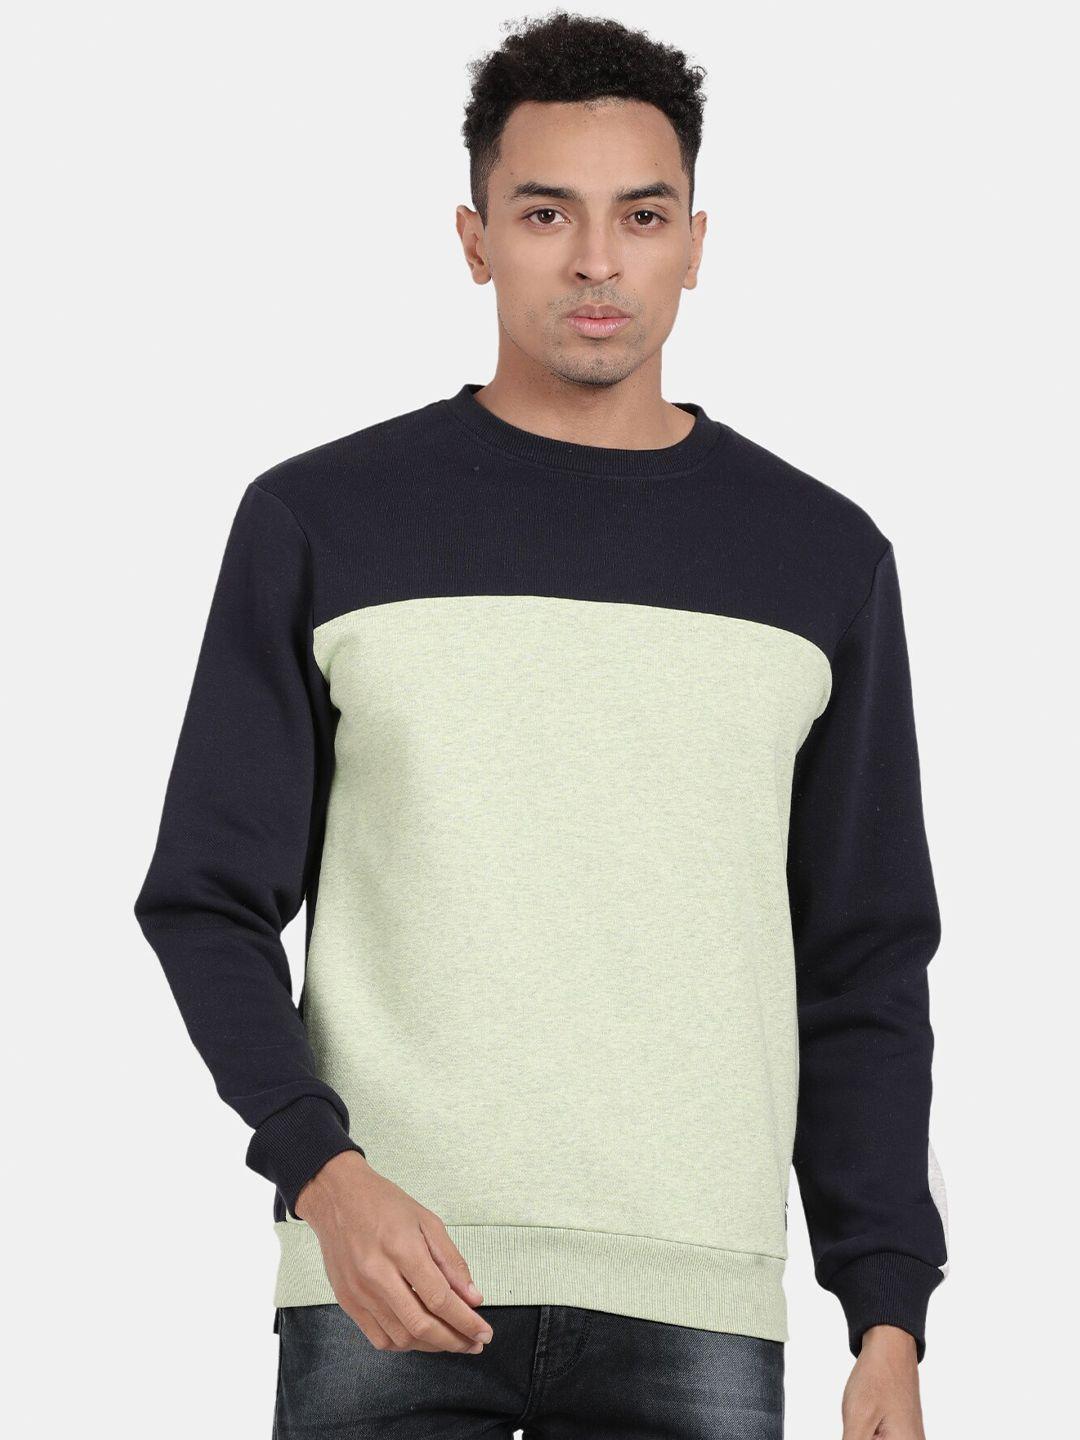 t-base-colourblocked-pullover-sweatshirt